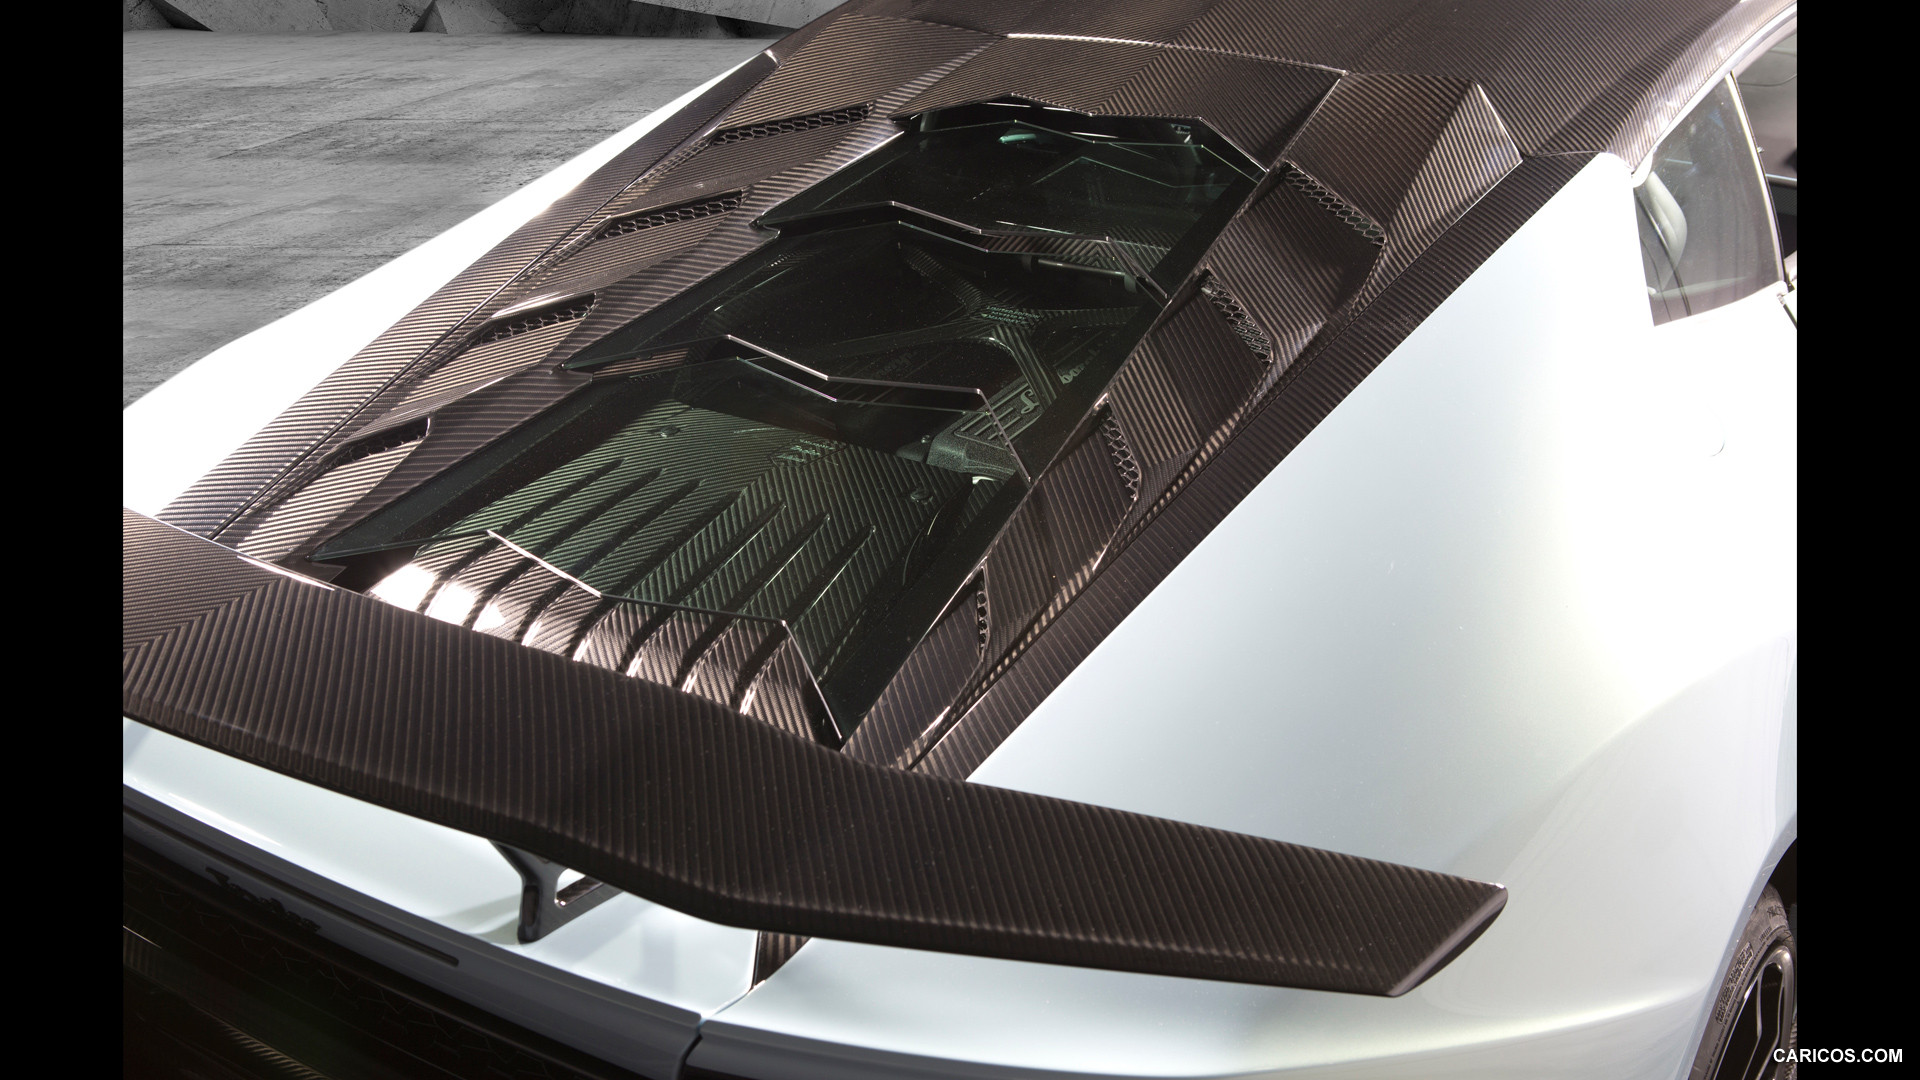 2015 Mansory Torofeo based on Lamborghini Huracan  - Spoiler, #4 of 8